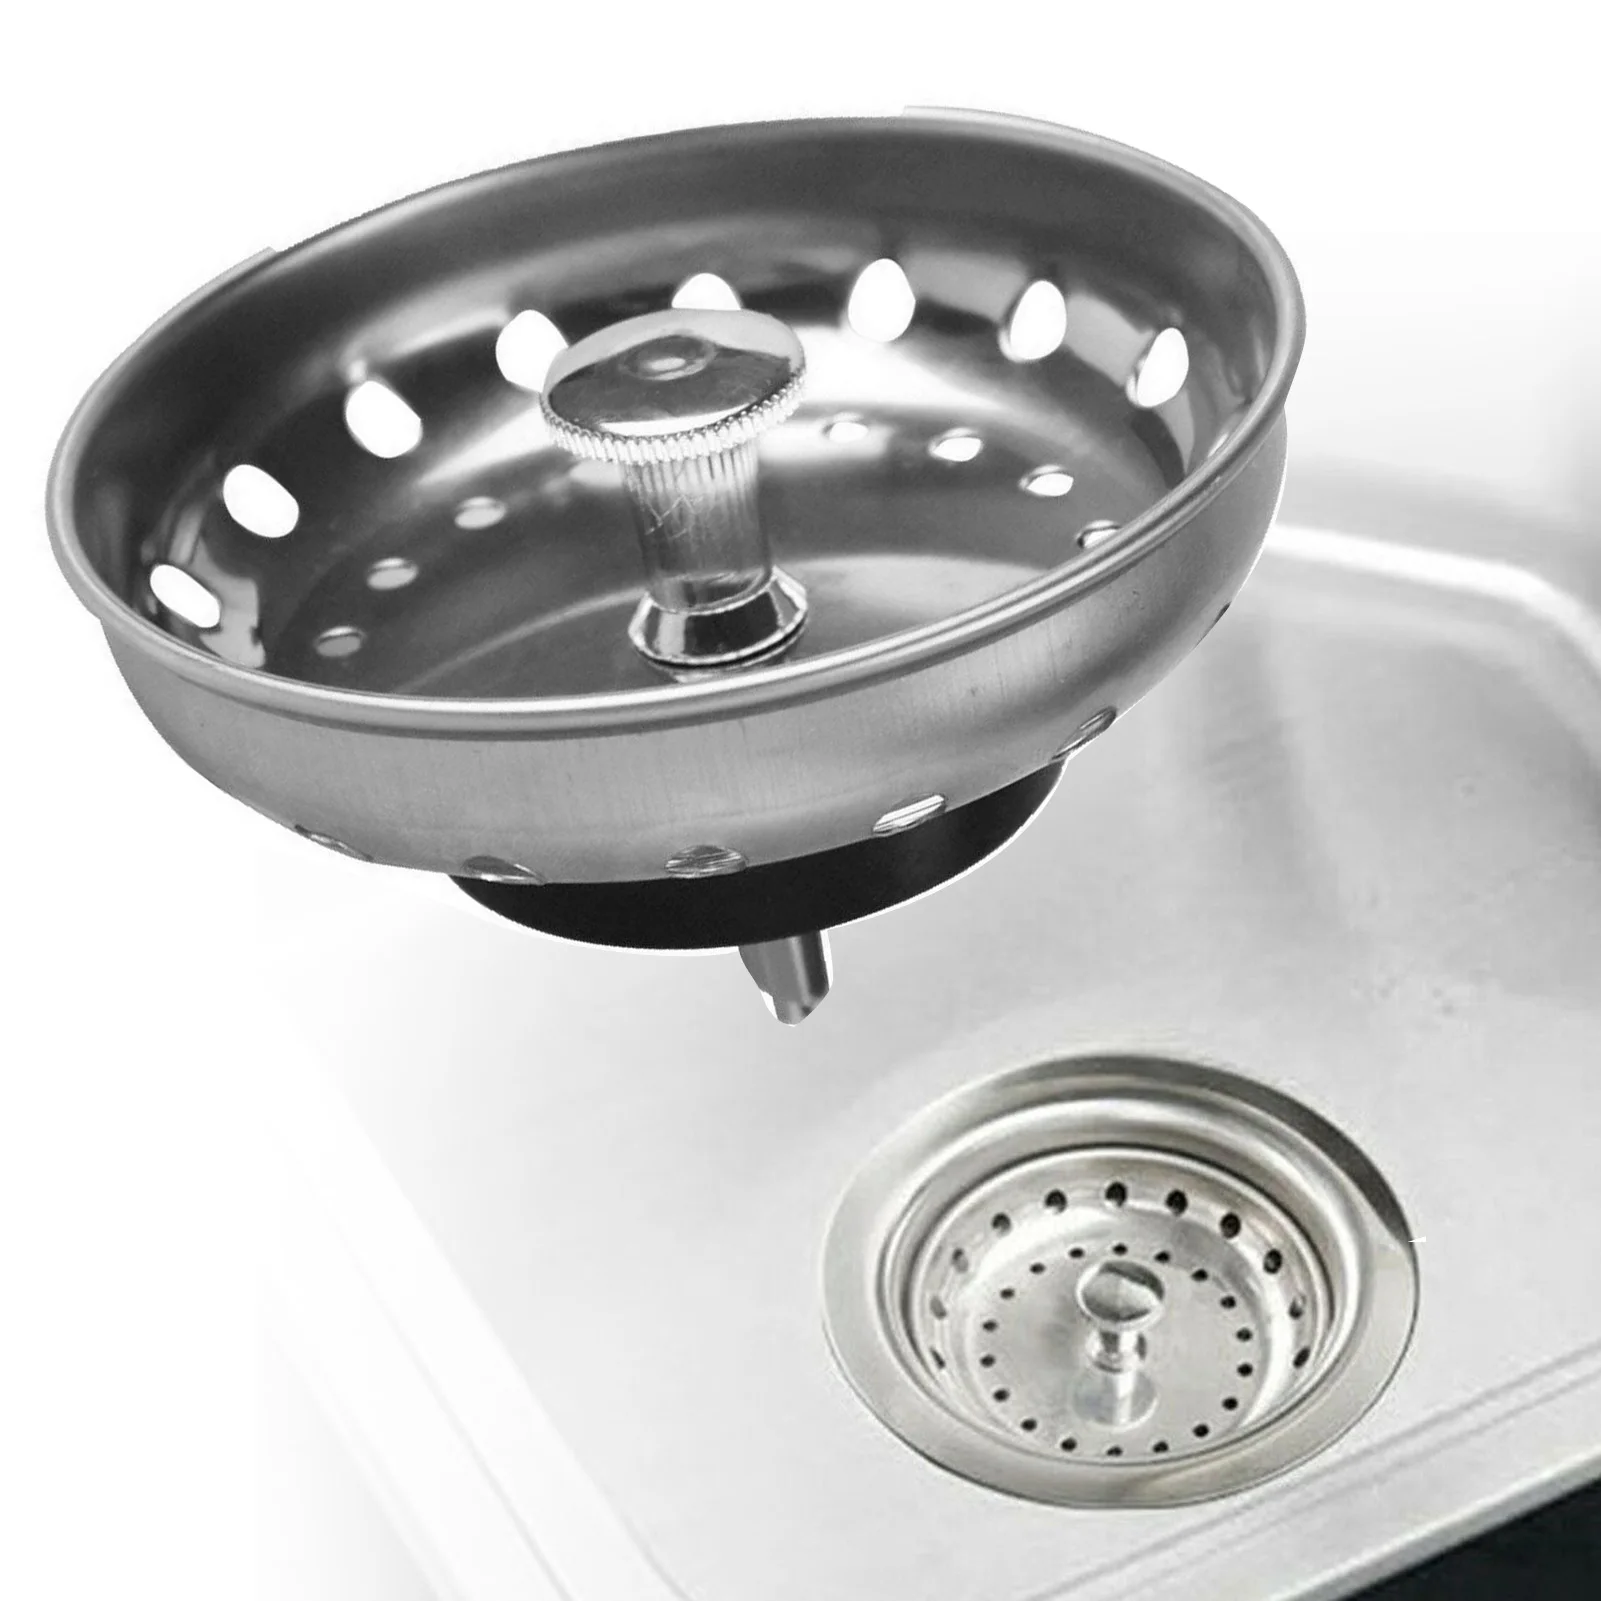 

Stainless Steel Kitchen Sink Filter Hole Bathtub Hair Catcher Stopper Bathroom Sewer Drain Strainer Basin Sink Waste Filter Plug